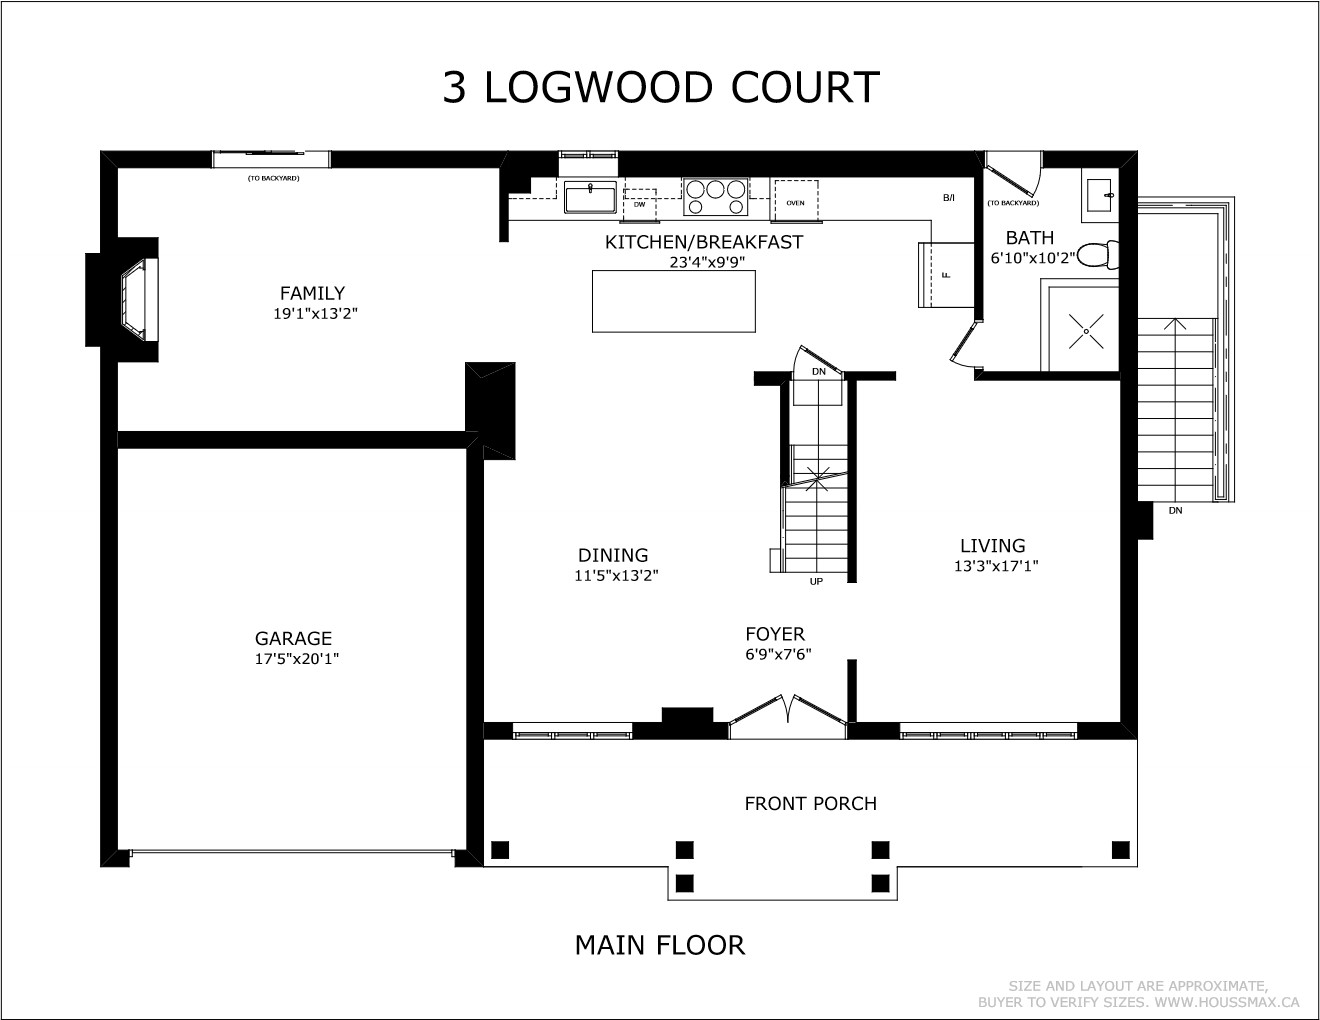 First level floor plans - 3 Logwood Court.